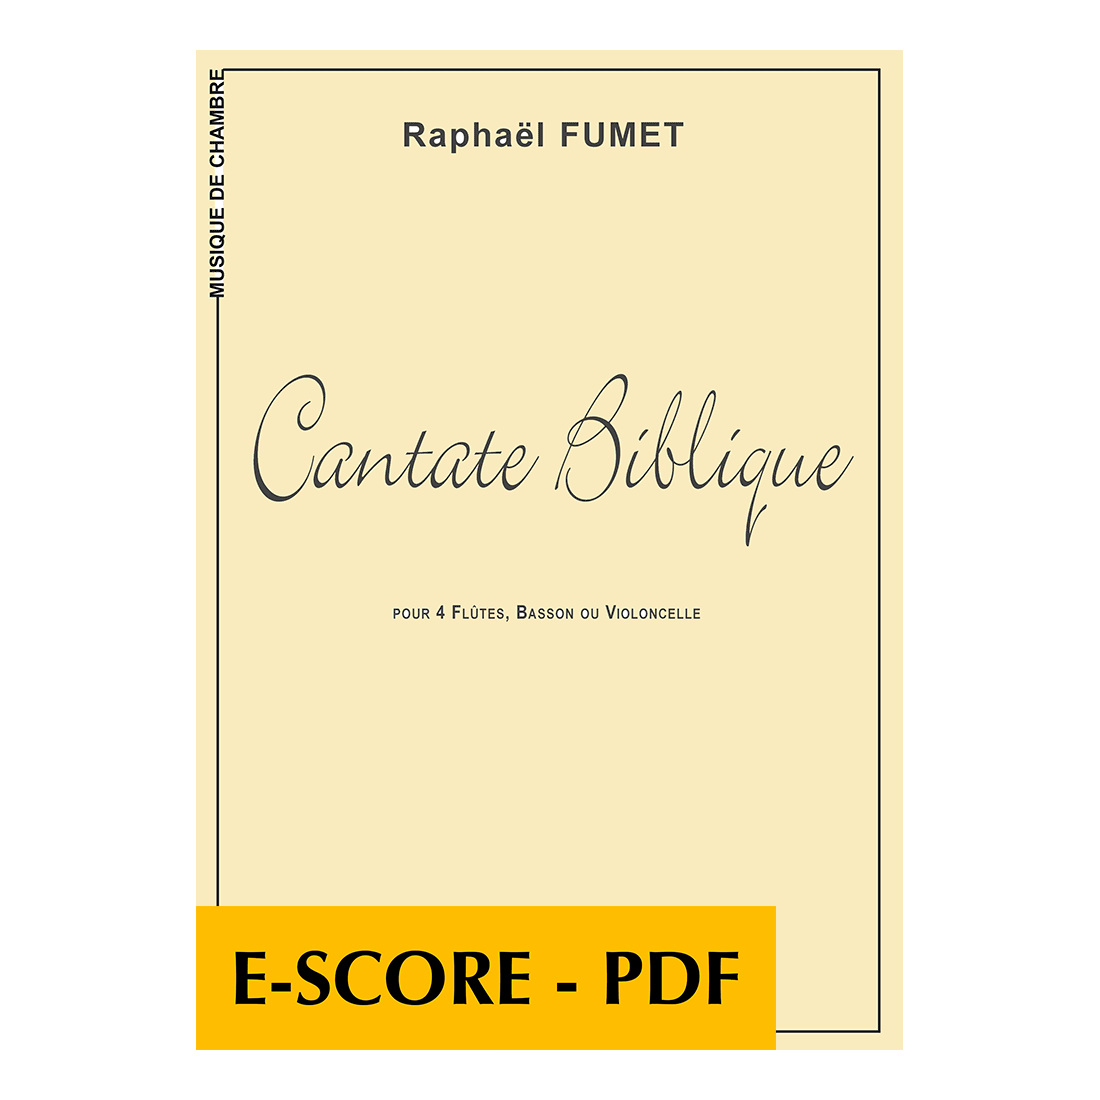 Biblical Cantata (Entre Ciel et Terre) for 4 flutes and bassoon or cello - E-score PDF